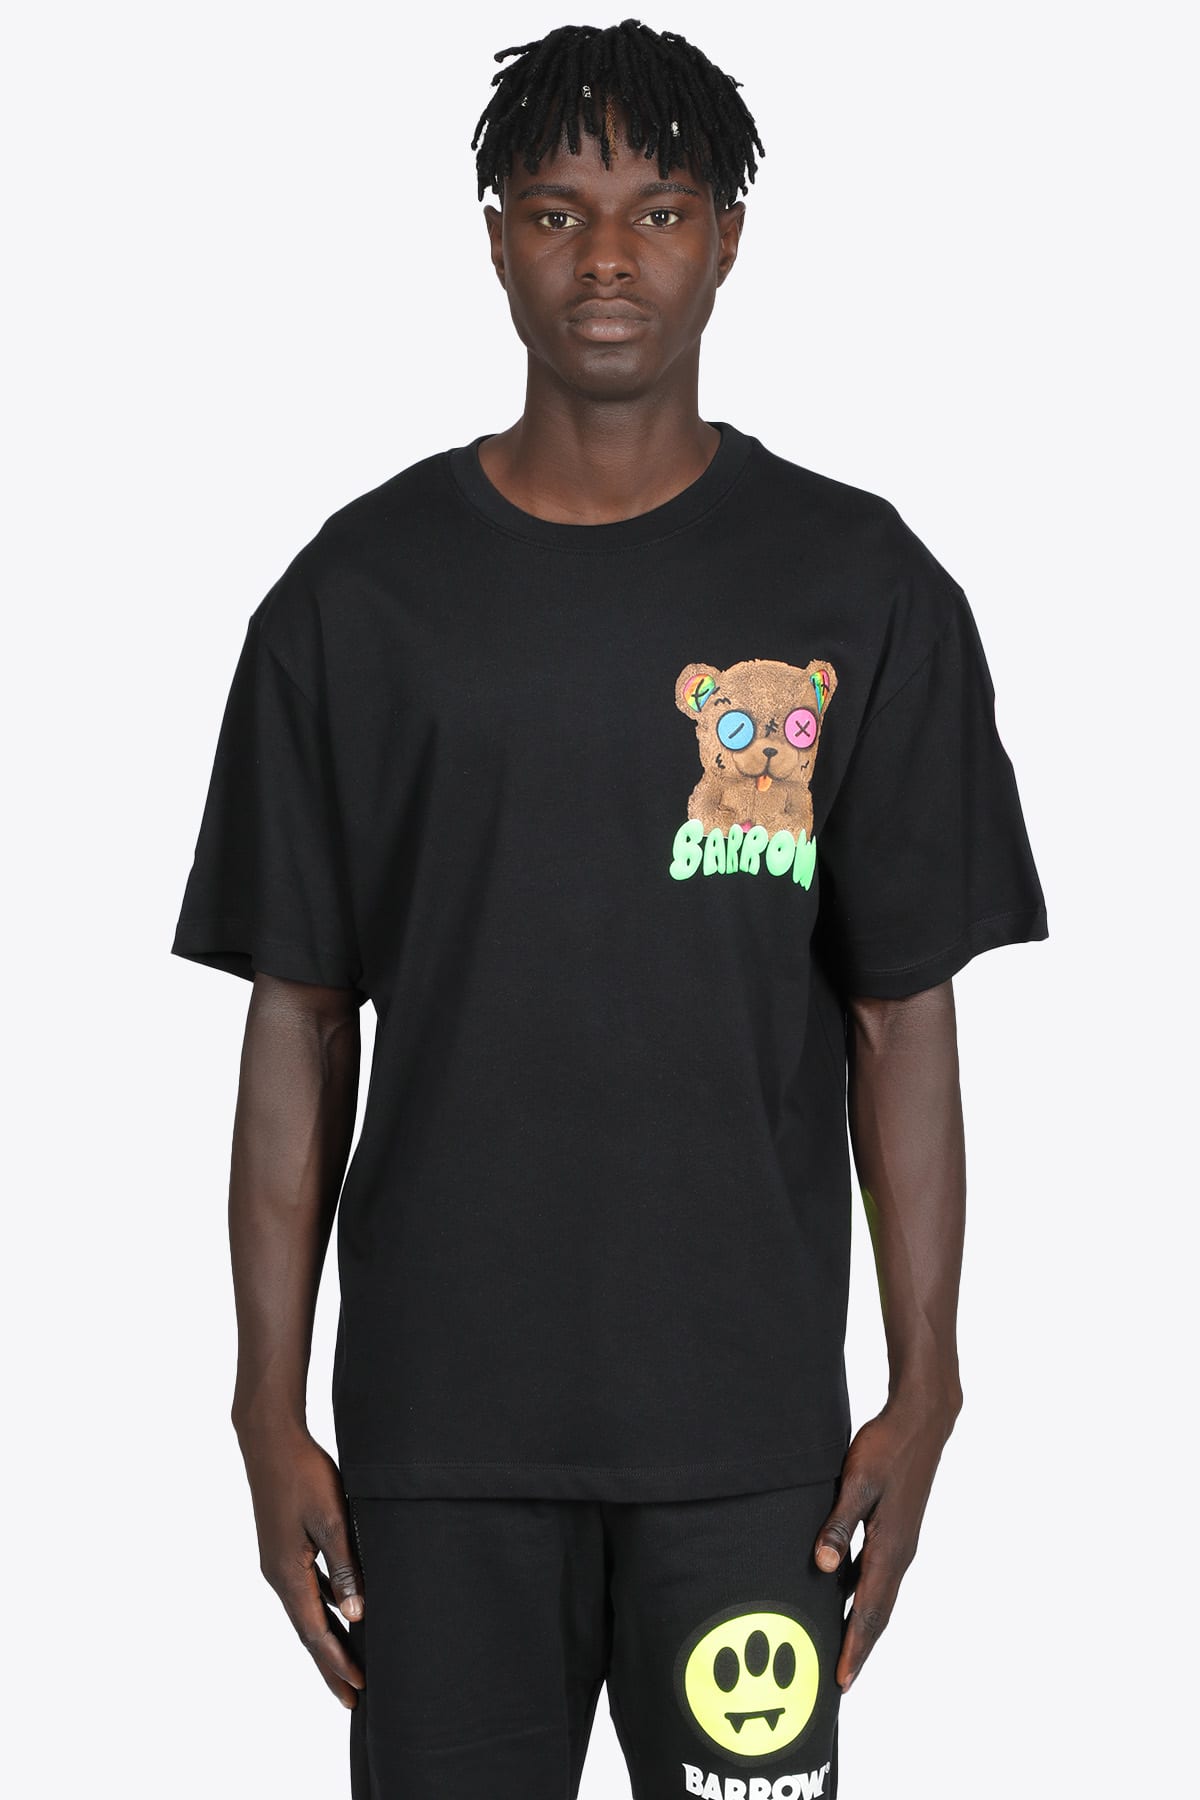 Barrow T-shirt Stampa Teddy Black cotton t-shirt with teddy-bear print